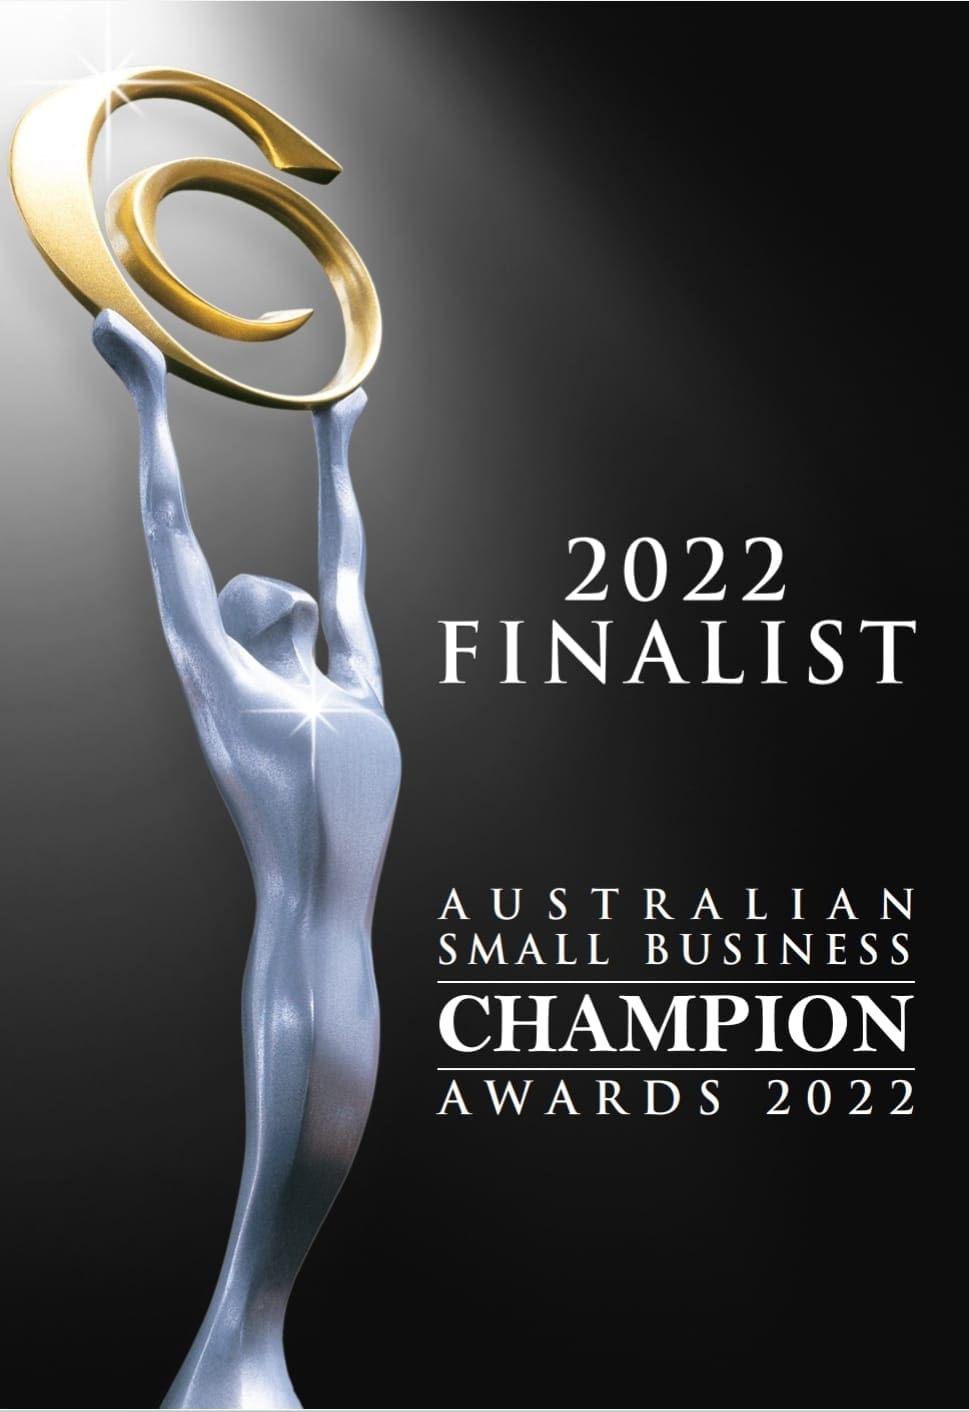 Family Dental care Australian Small Business Champion Award Finalist 2022